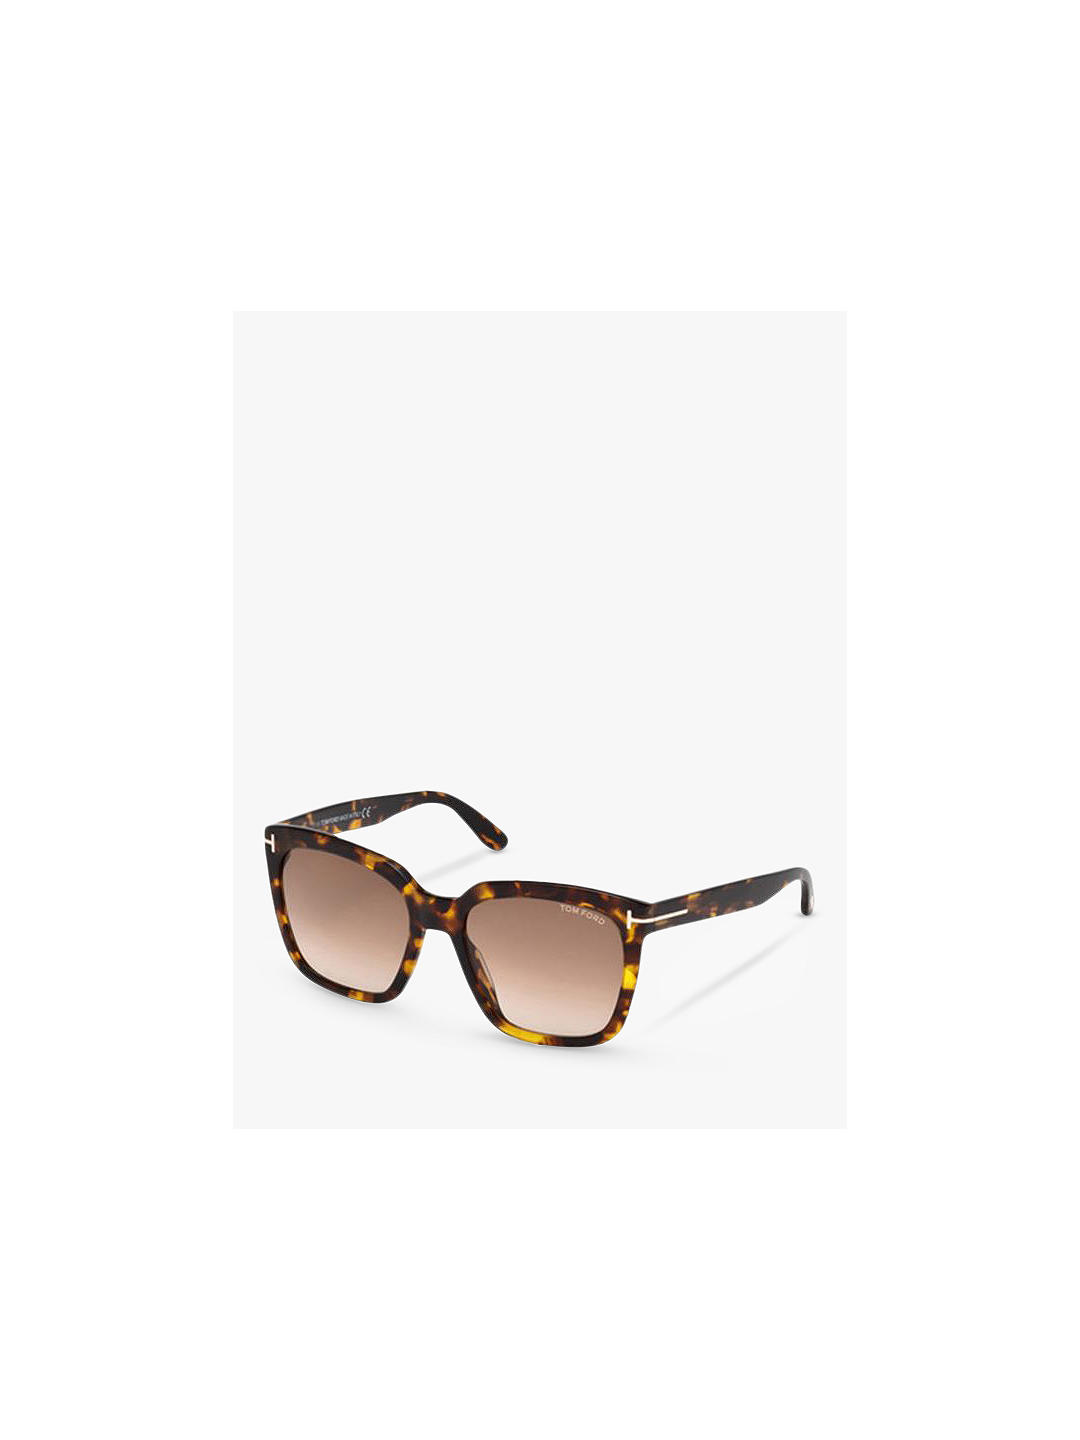 TOM FORD FT0502 Square Sunglasses, Havana/Brown Gradient